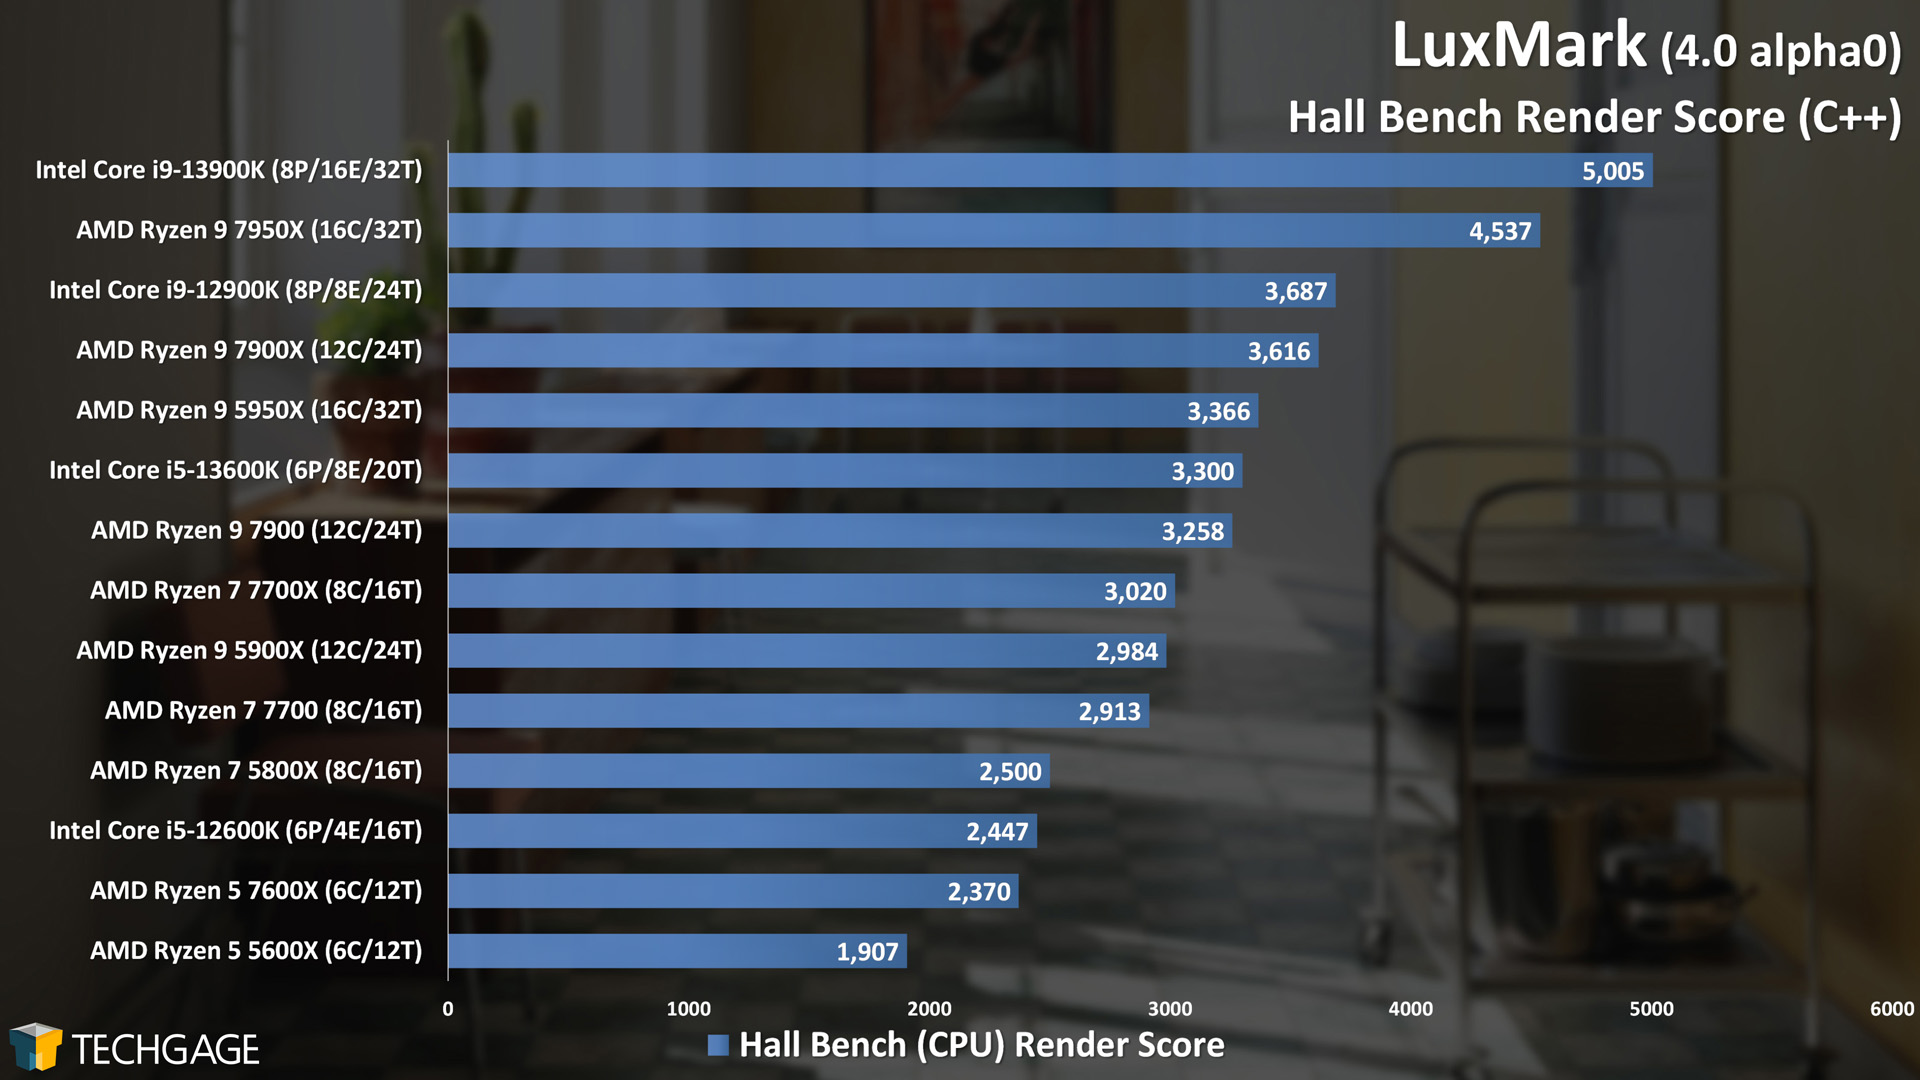 LuxMark - CPU Rendering Performance (Hall Bench)